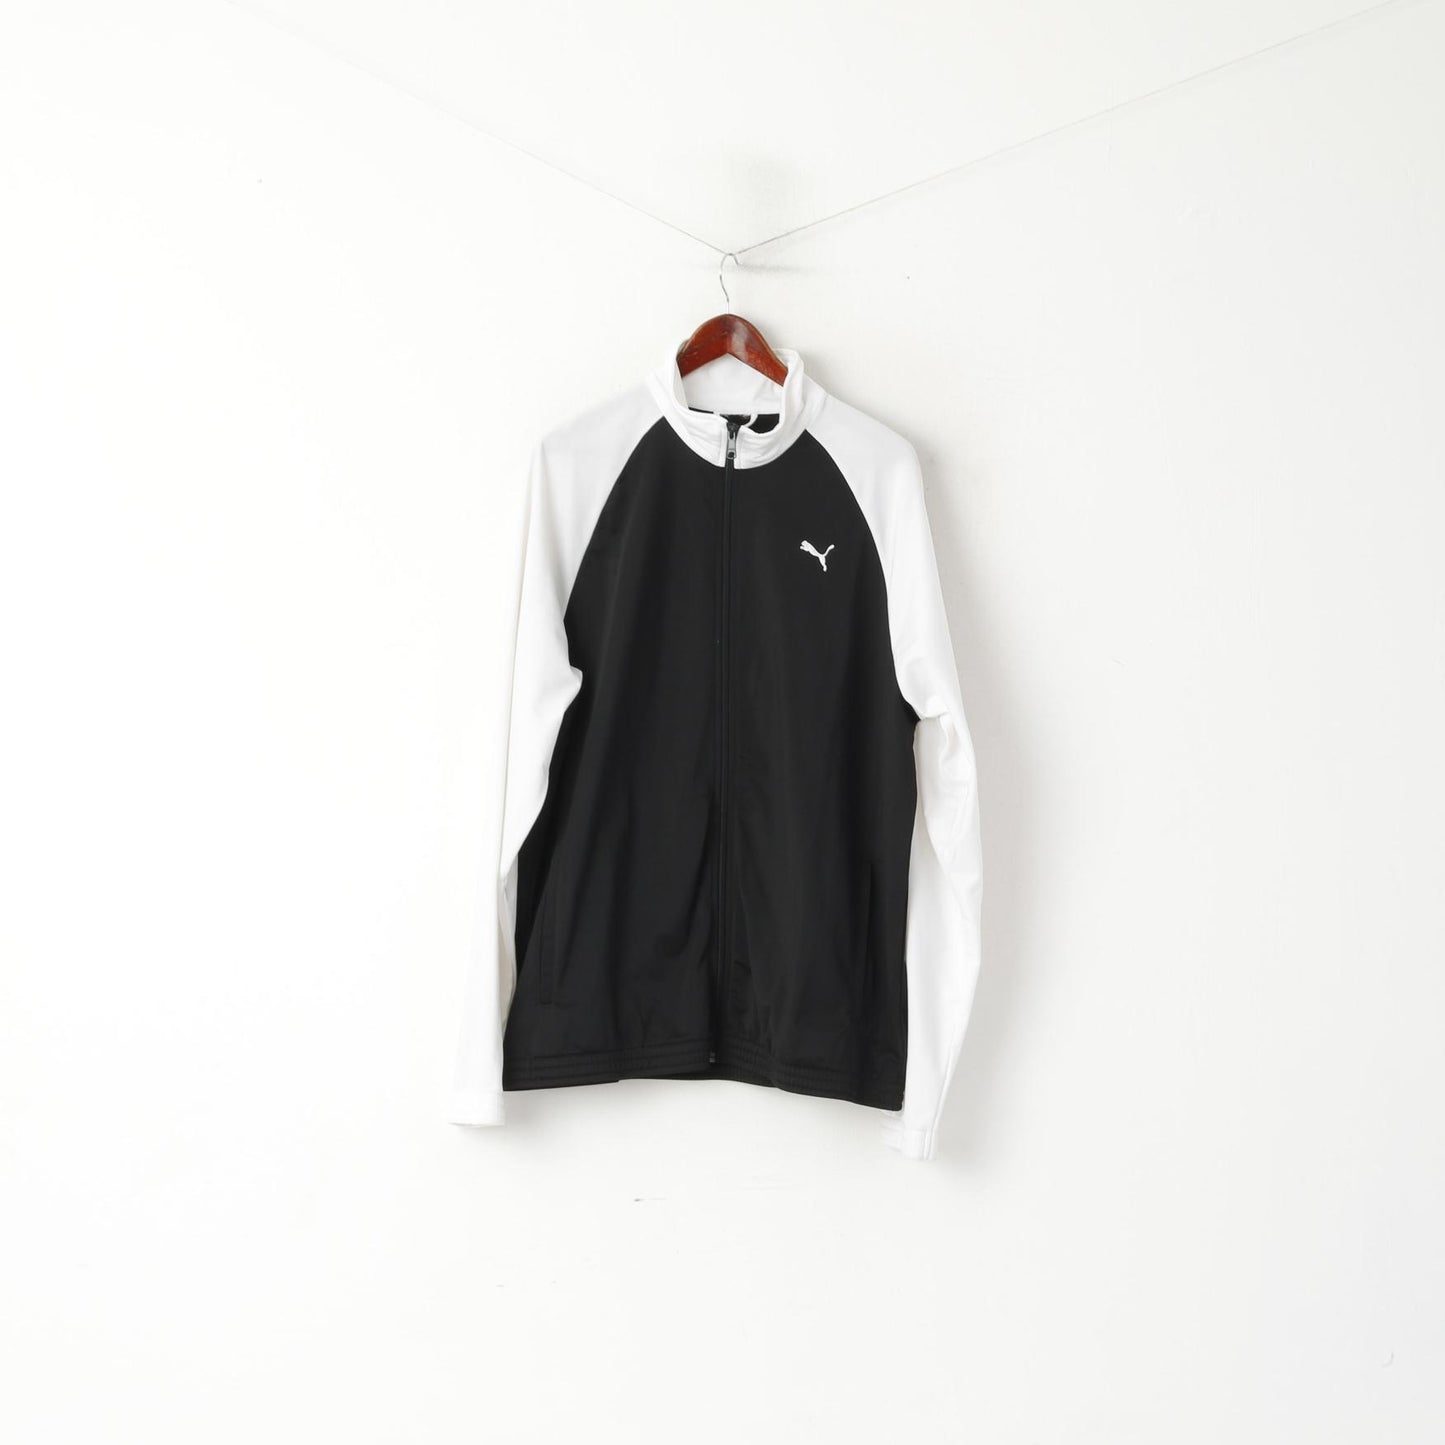 Puma Men XL Sweatshirt Black White Shiny Full Zipper Sport Vintage Track Top